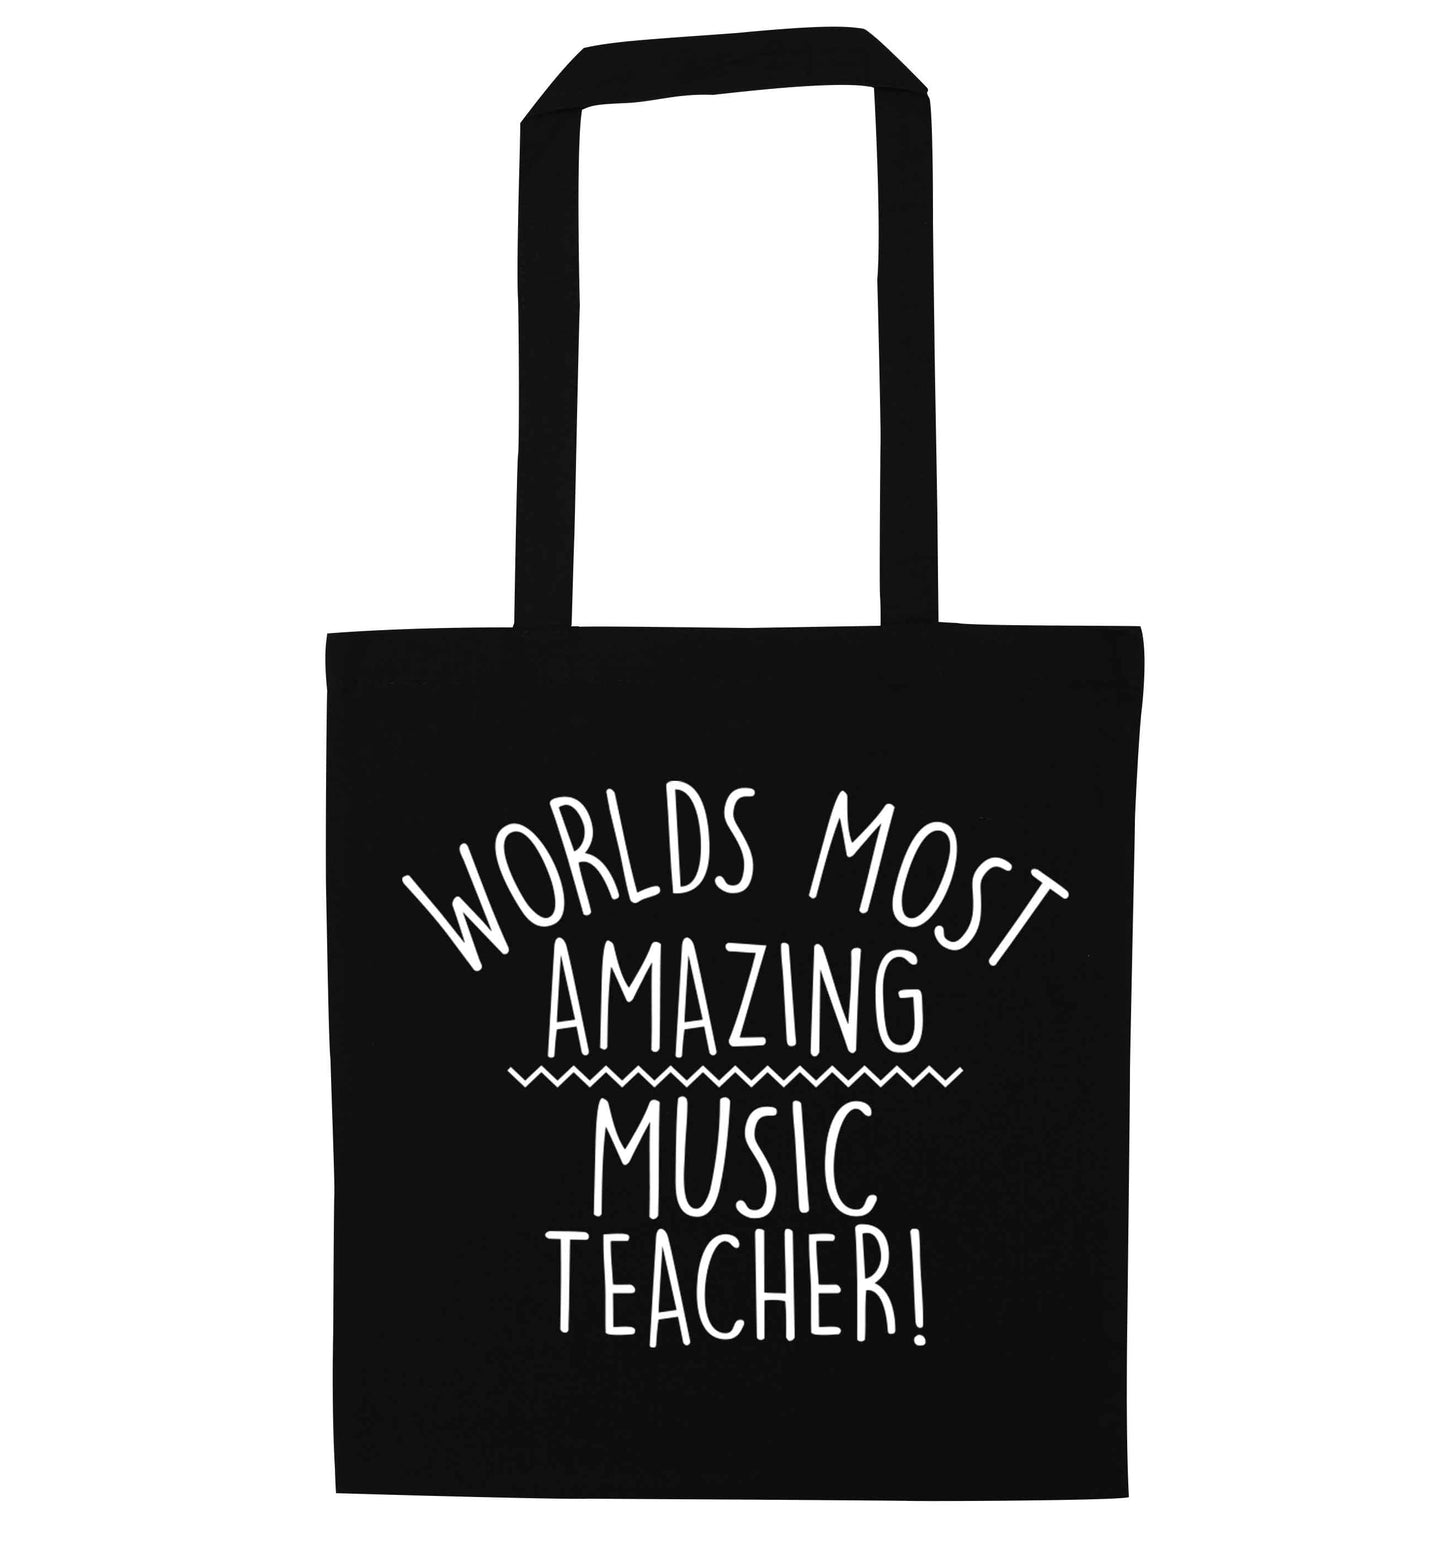 Worlds most amazing music teacher black tote bag